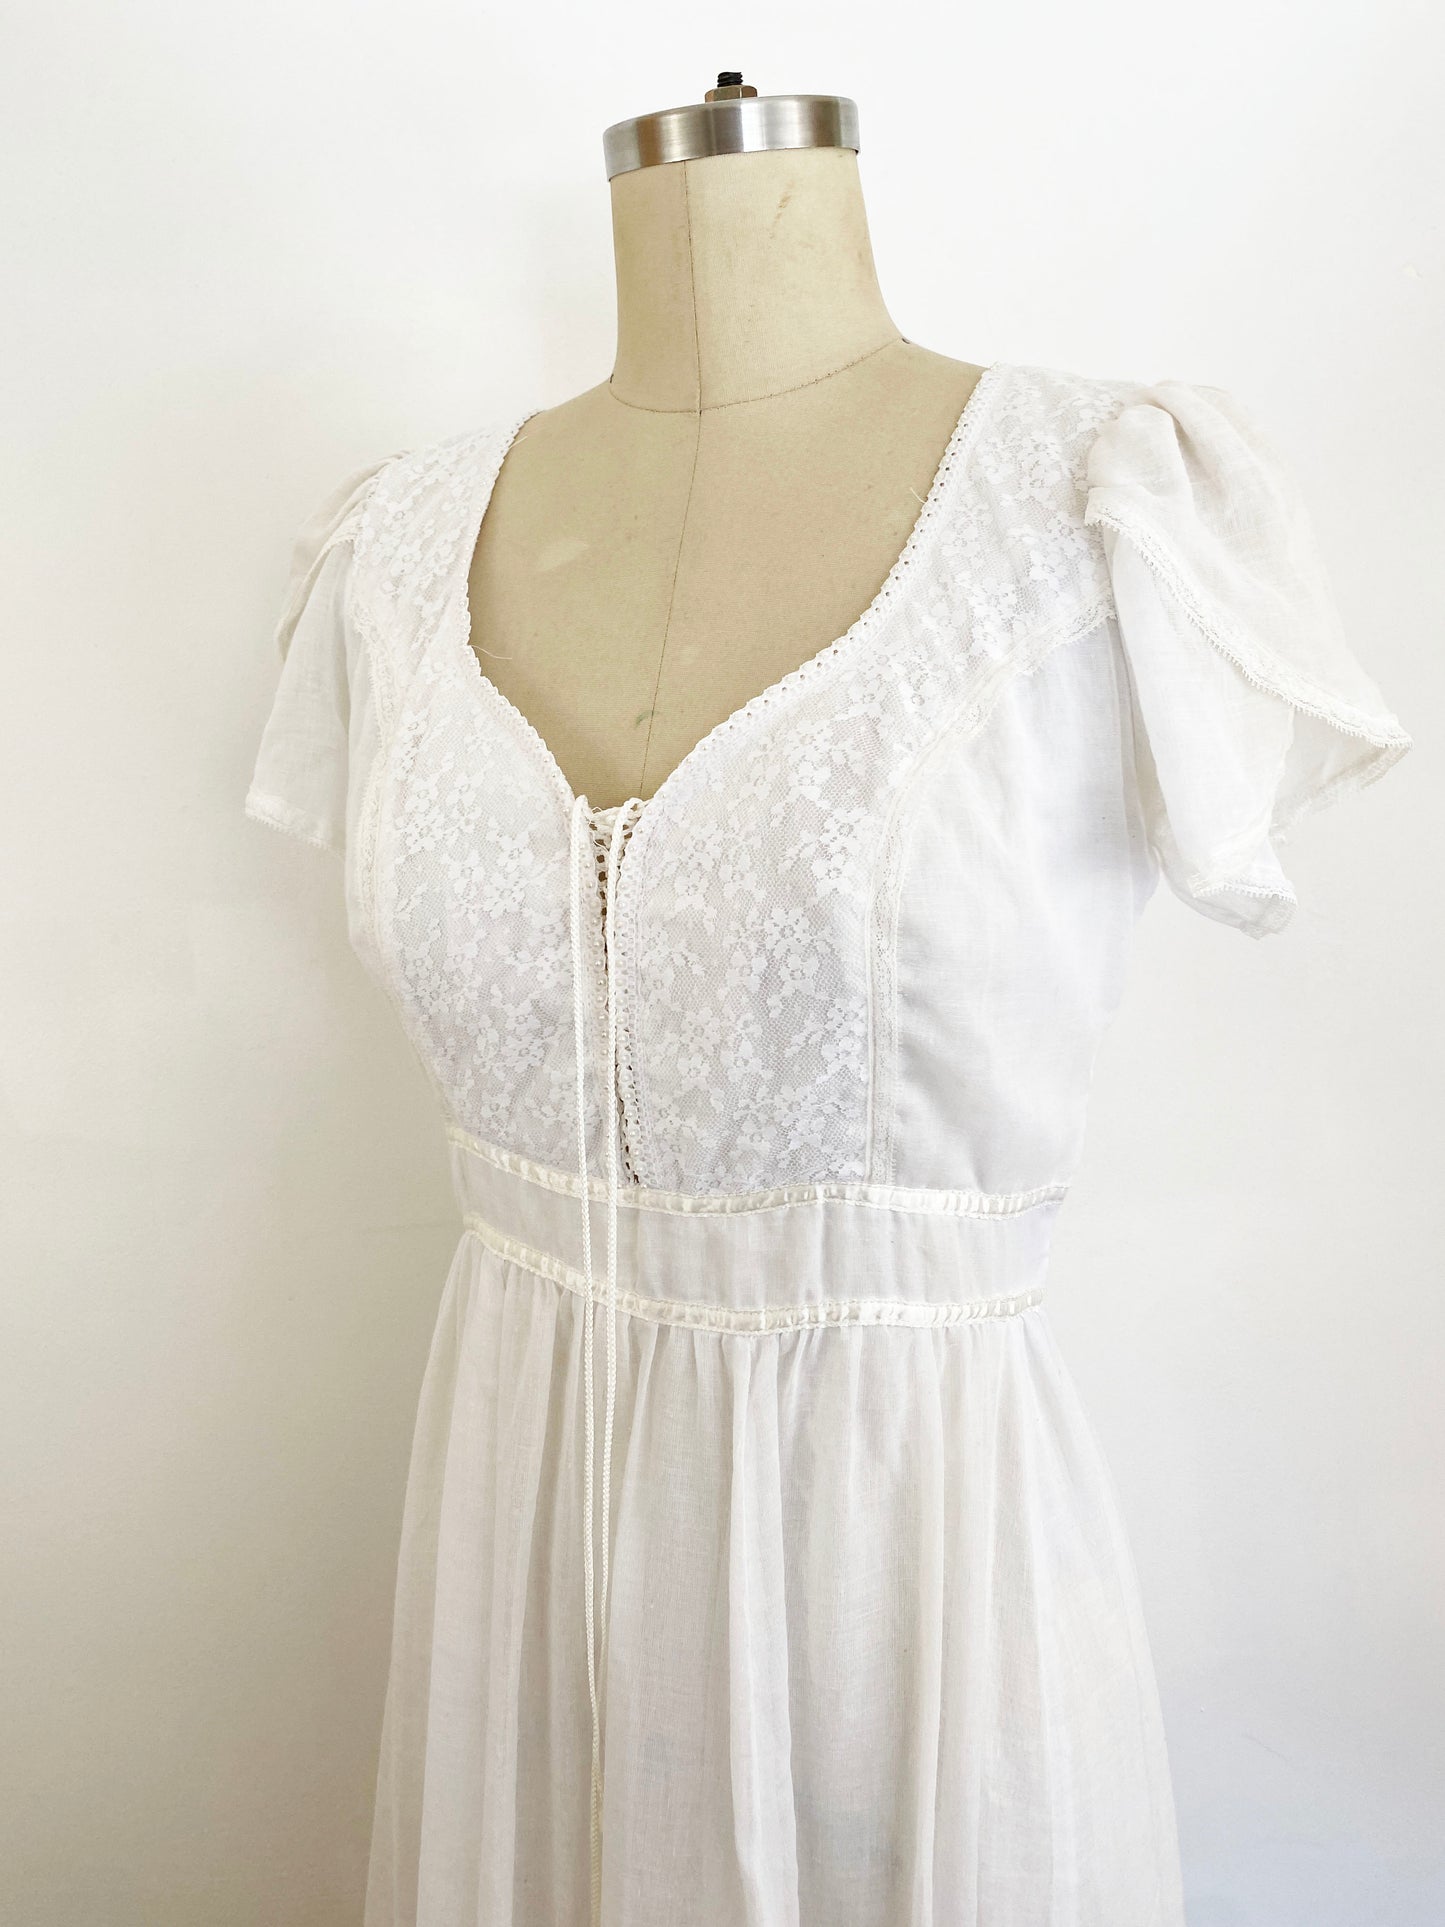 1970-1980s Gunne Sax White Gauzy Lace Corset Dress Renaissance Prairie Midi Dress Short Sleeve Boho Hippie Cottagecore Romantic / Small 4